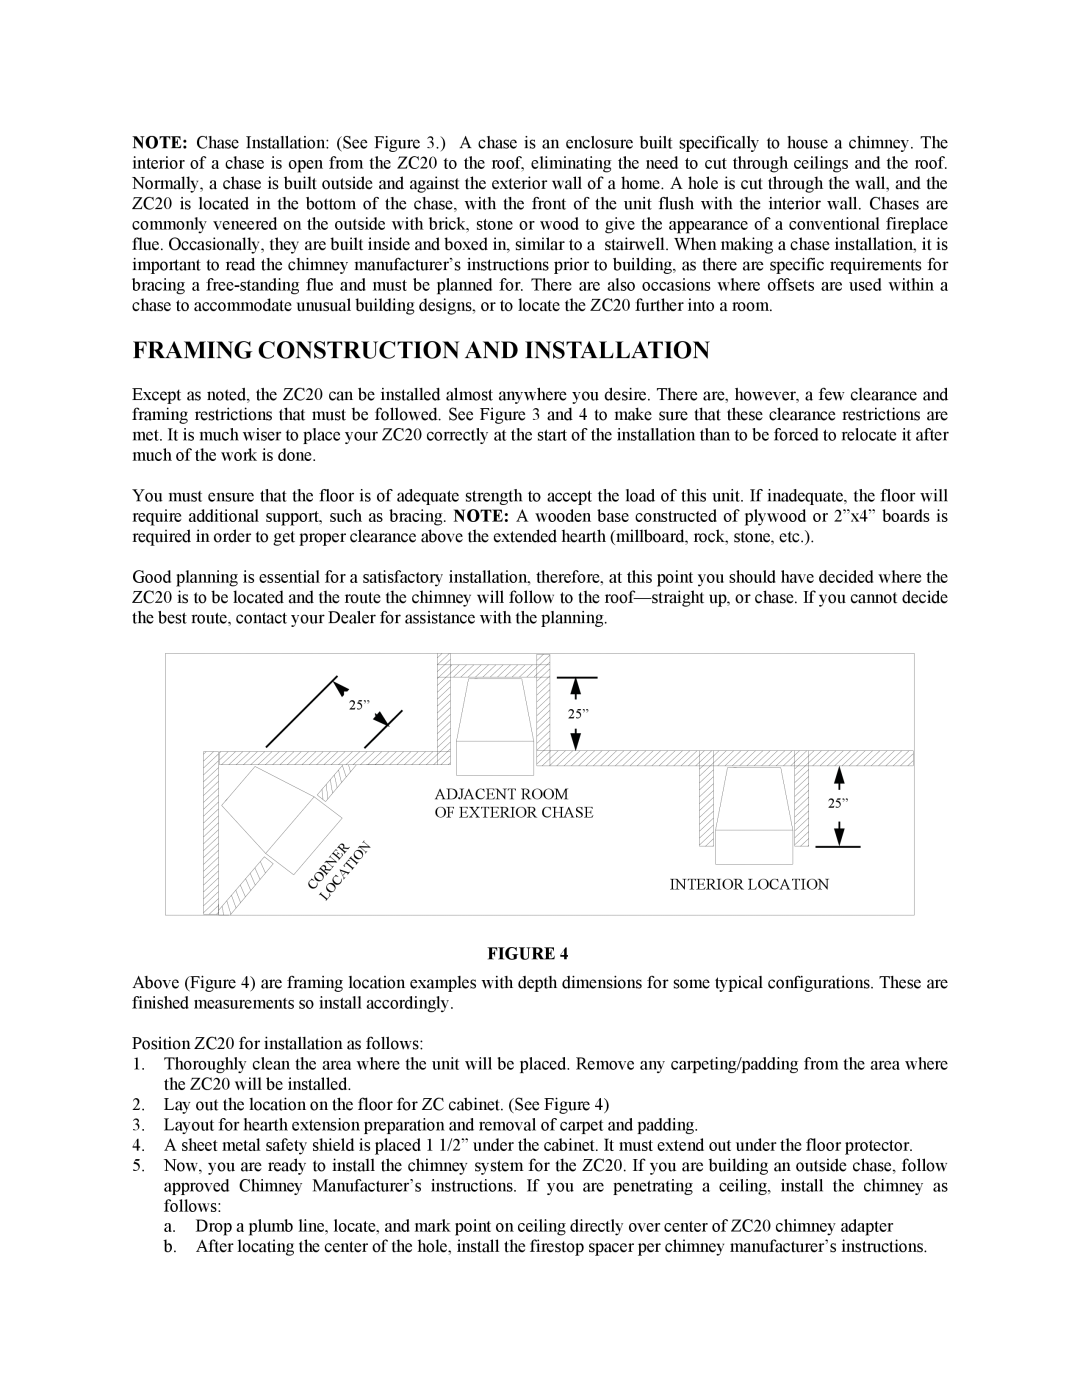 New Buck Corporation 20 Room Heater manual Framing Construction And Installation 